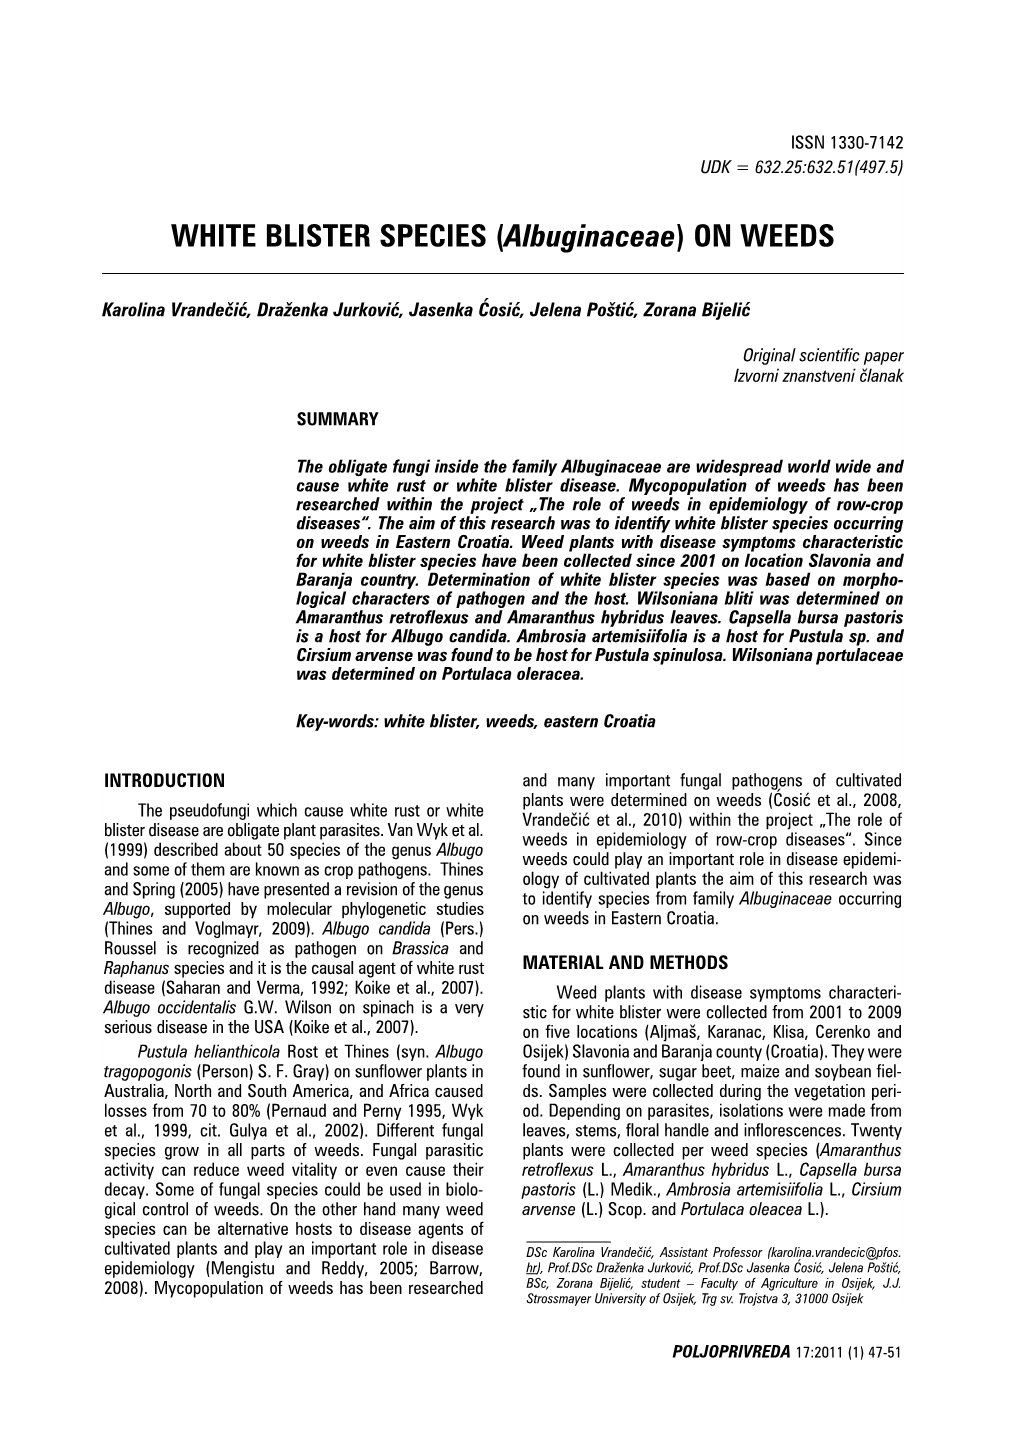 WHITE BLISTER SPECIES (Albuginaceae) on WEEDS